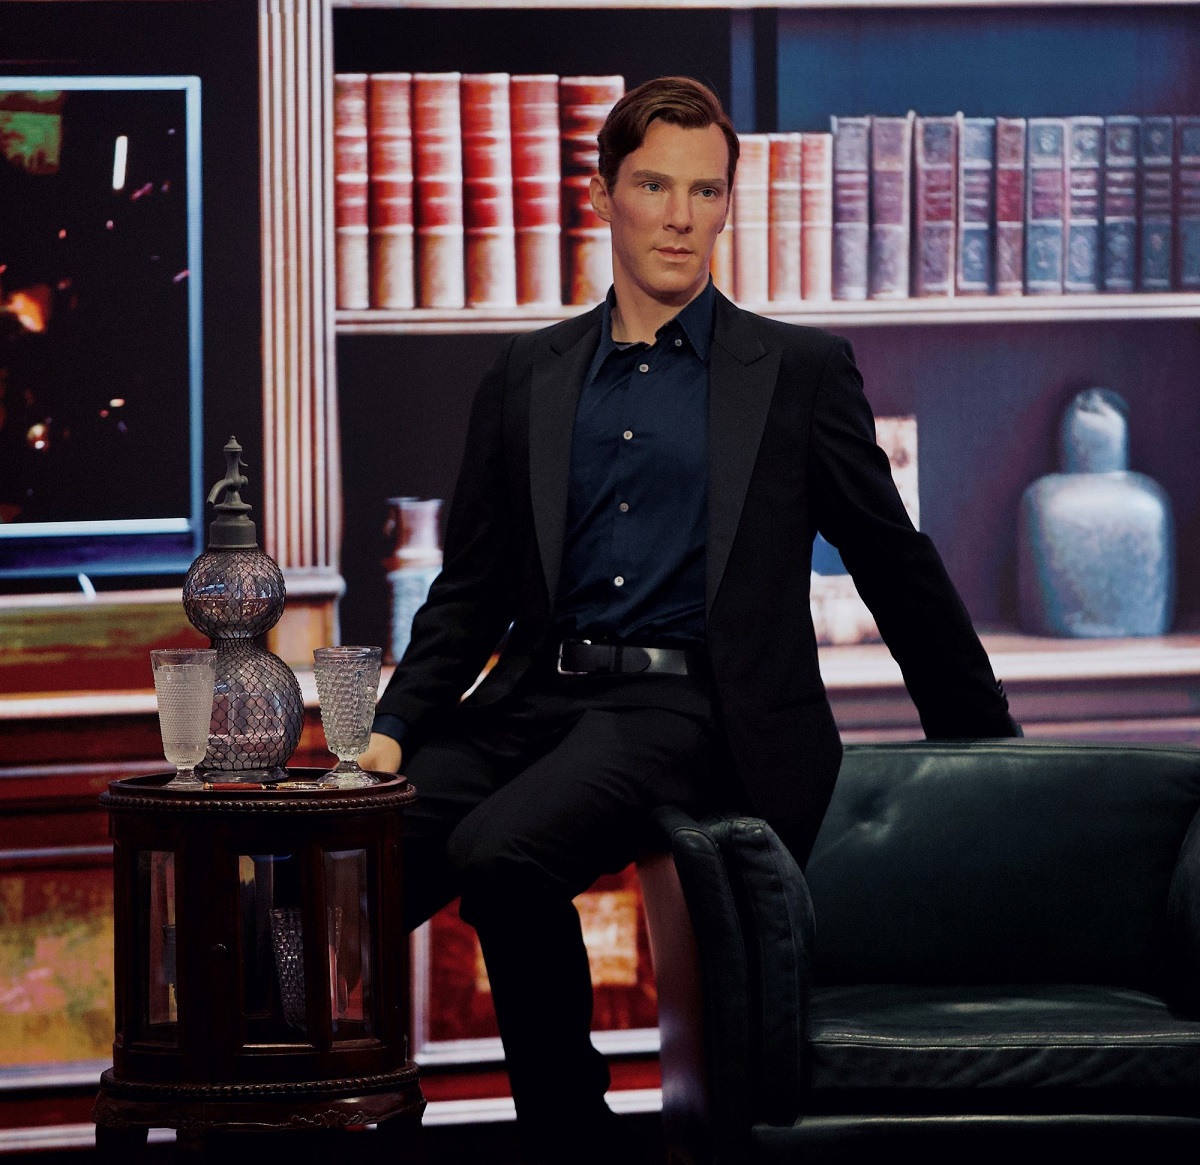 Benedict Cumberbatch a Madame Tussauds Budapest új lakója